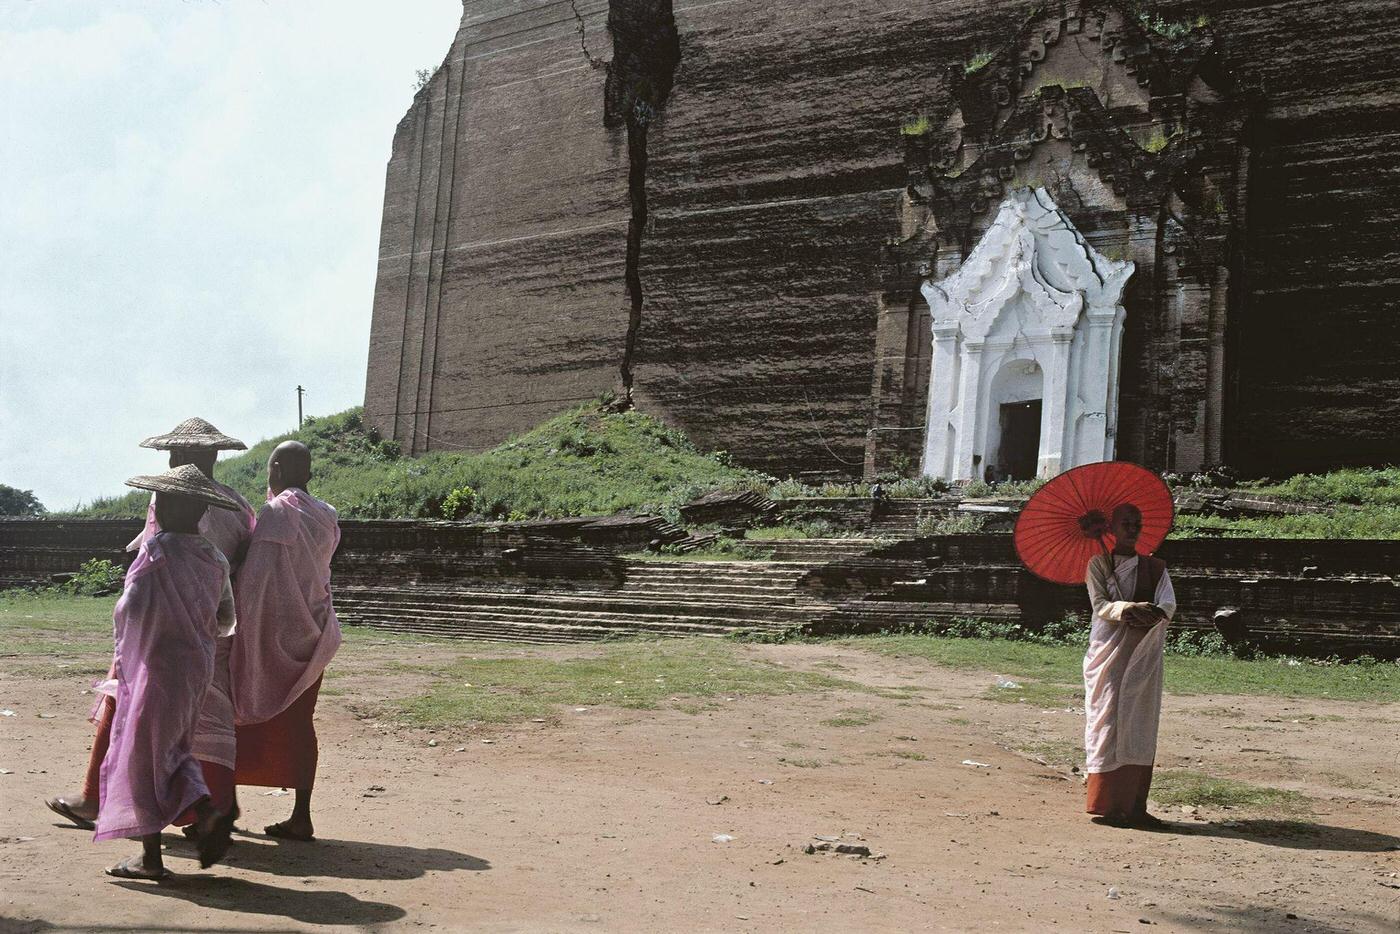 Buddhist Nuns in Mandalay, Myanmar - Mingun Paya Temple, 1980s